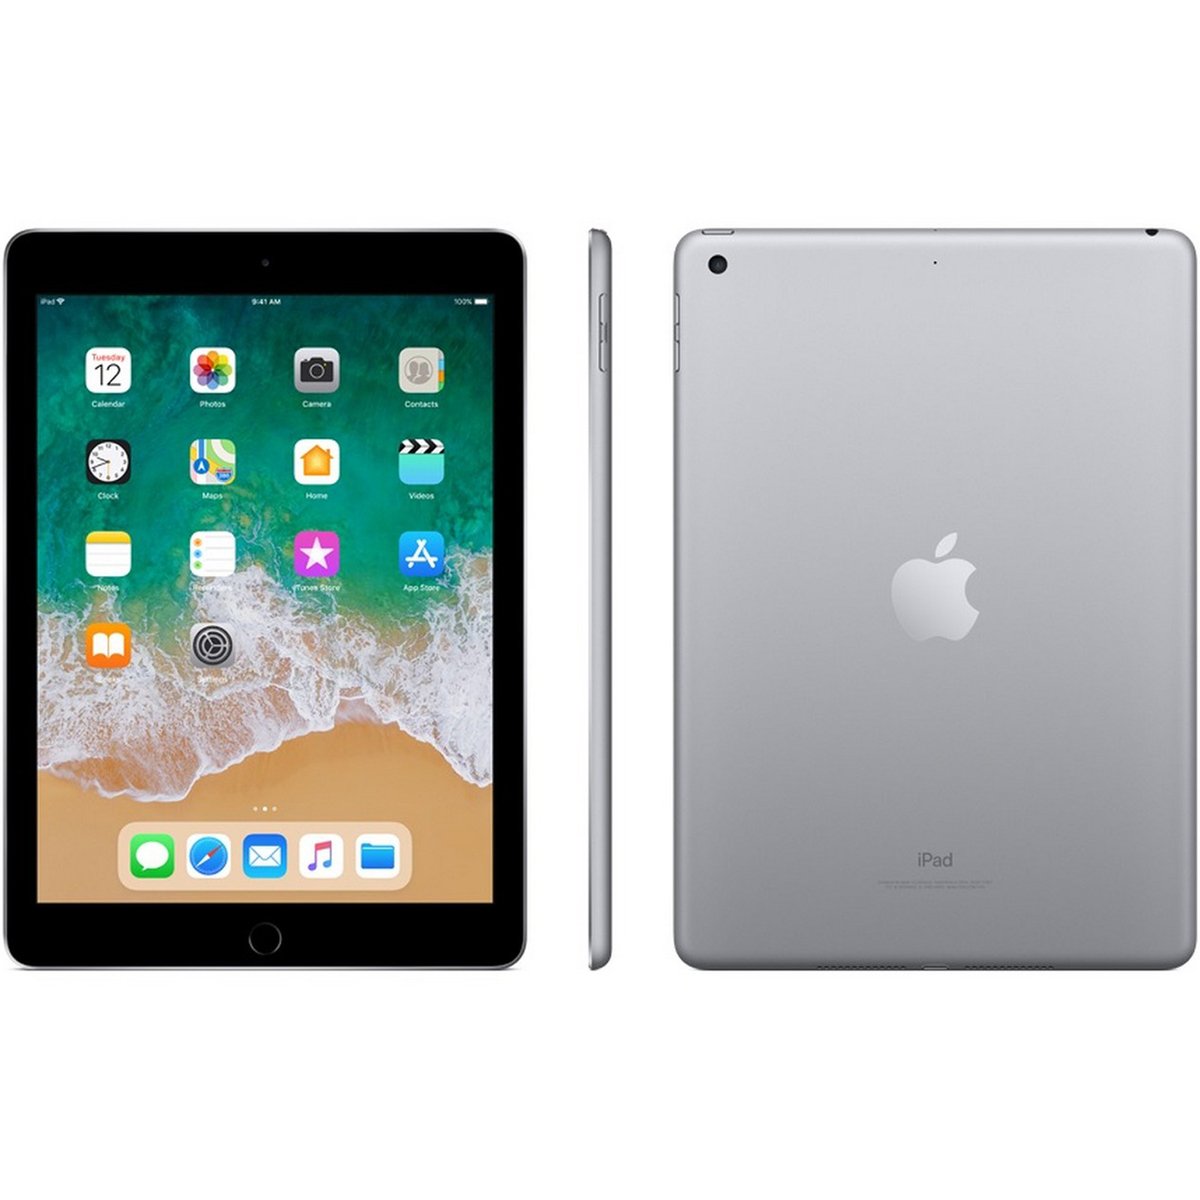 Apple iPad-6th Generation 9.7inch Wifi 128GB Space Grey